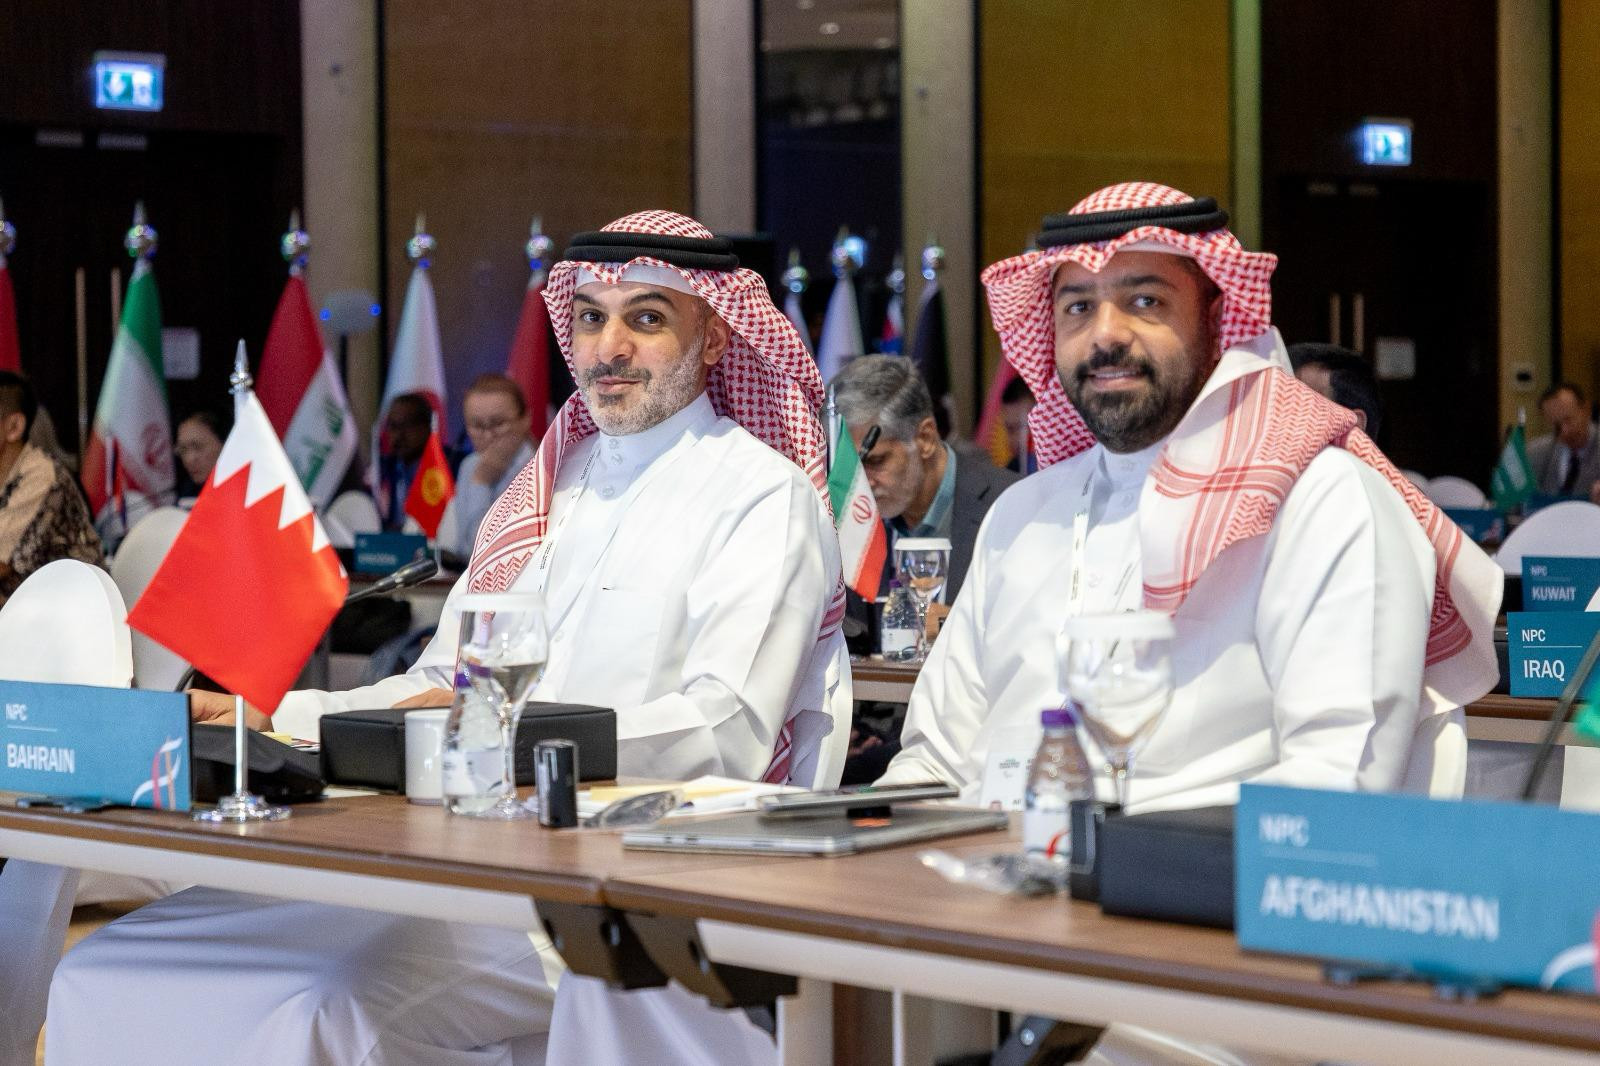 Sheikh Mohammed bin Daij Al Khalifa, President of the Bahrain Paralympic Committee, accompanied by Mr. Ali bin Mohammed Al Majid, the Secretary-General of the Bahrain Paralympic Committee